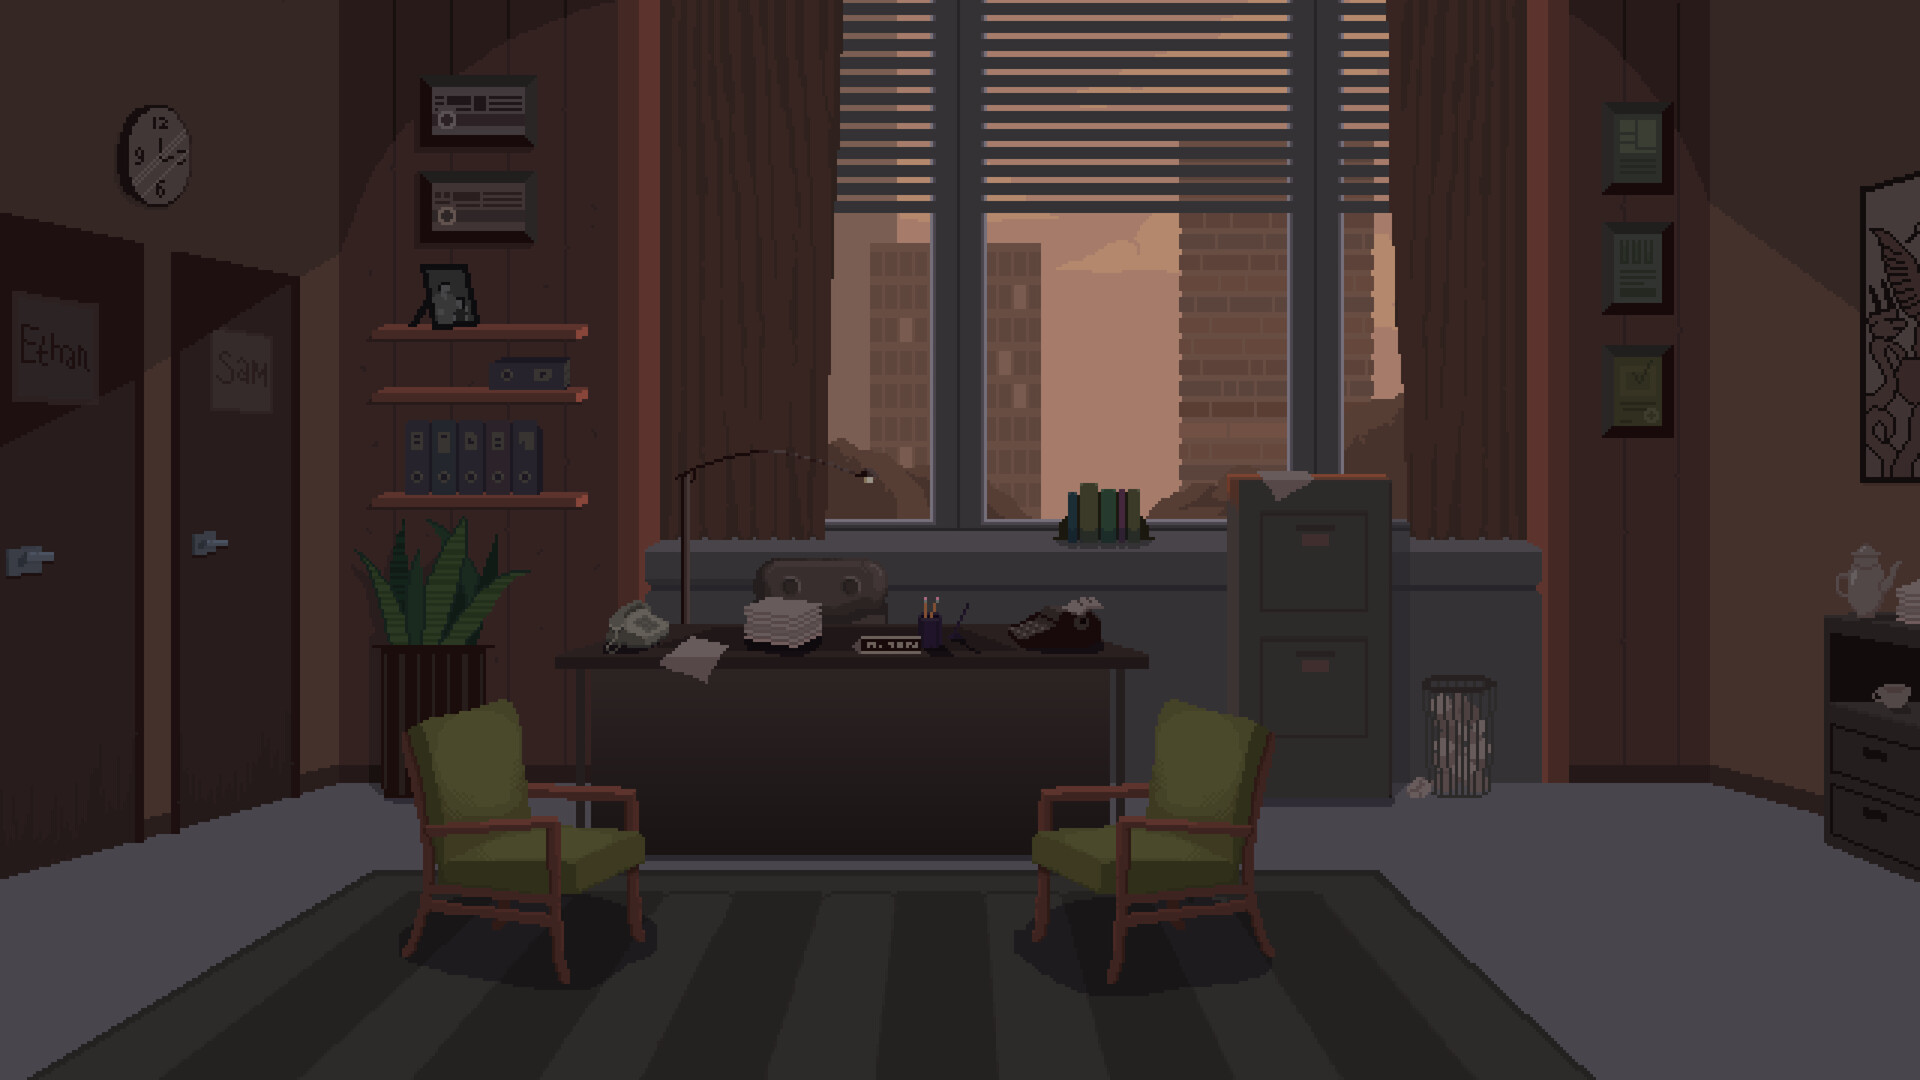 ArtStation - Pixel Art Office Background